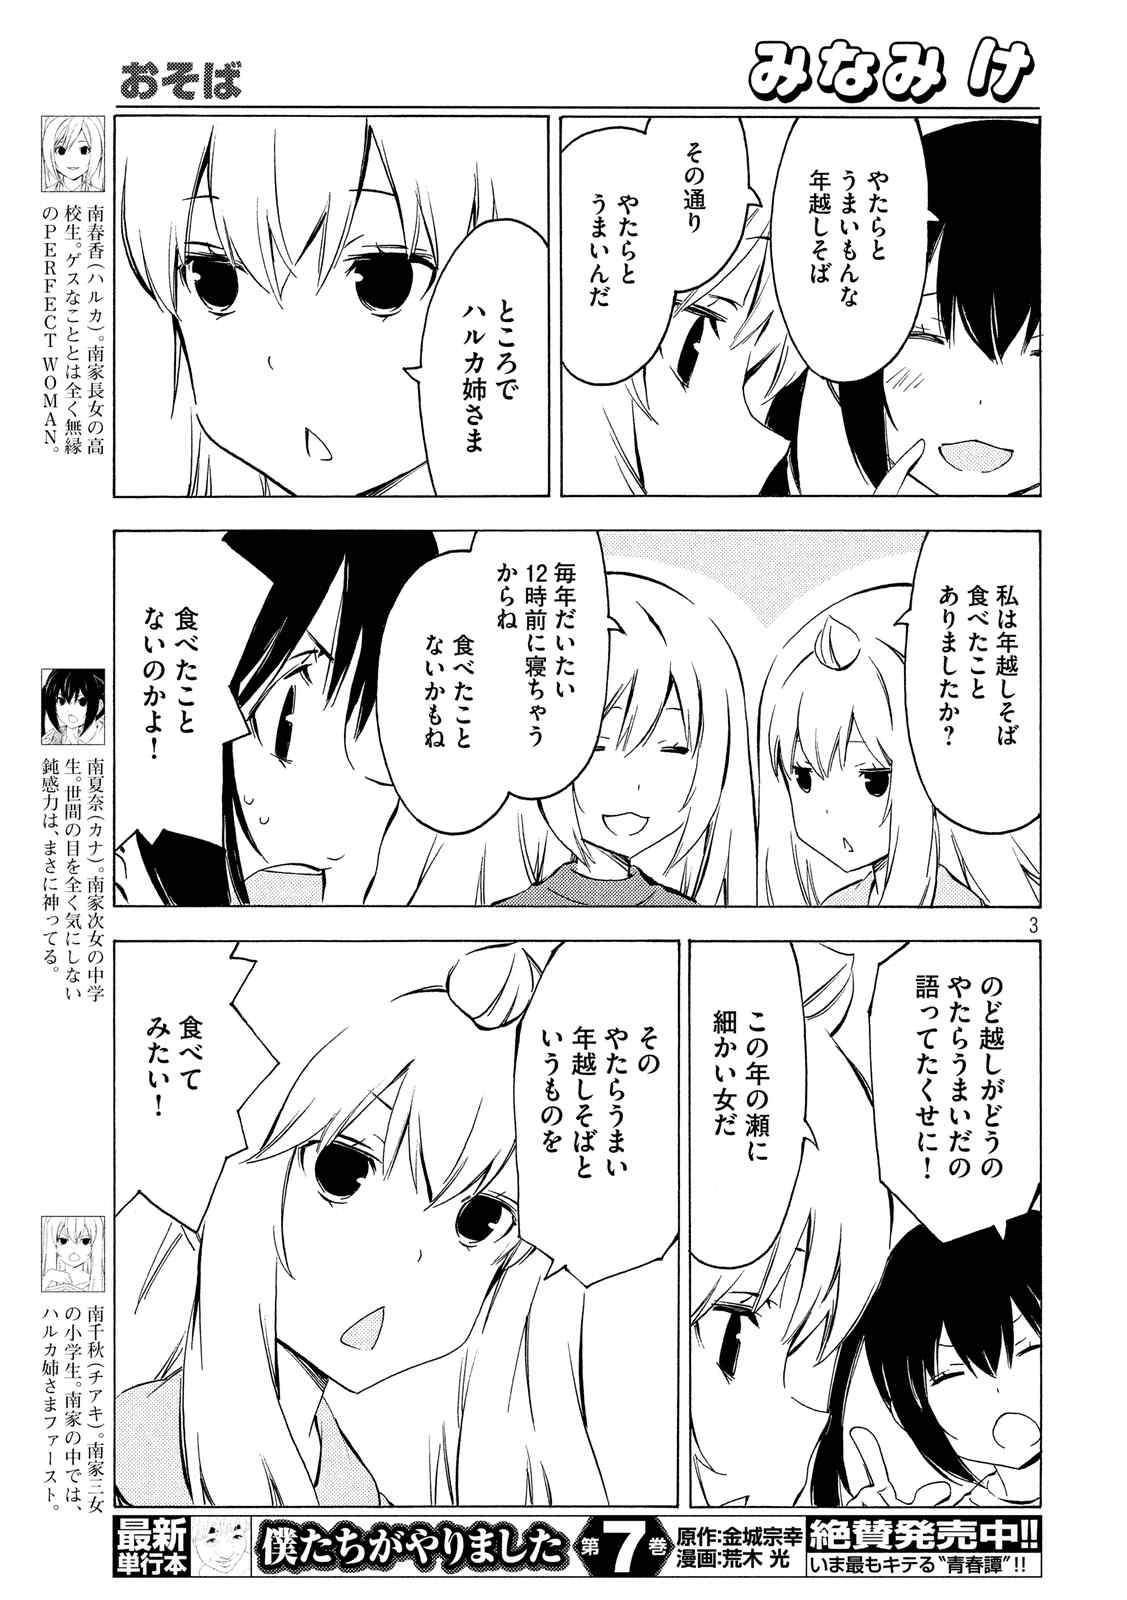 Minami-ke - Chapter 307 - Page 3